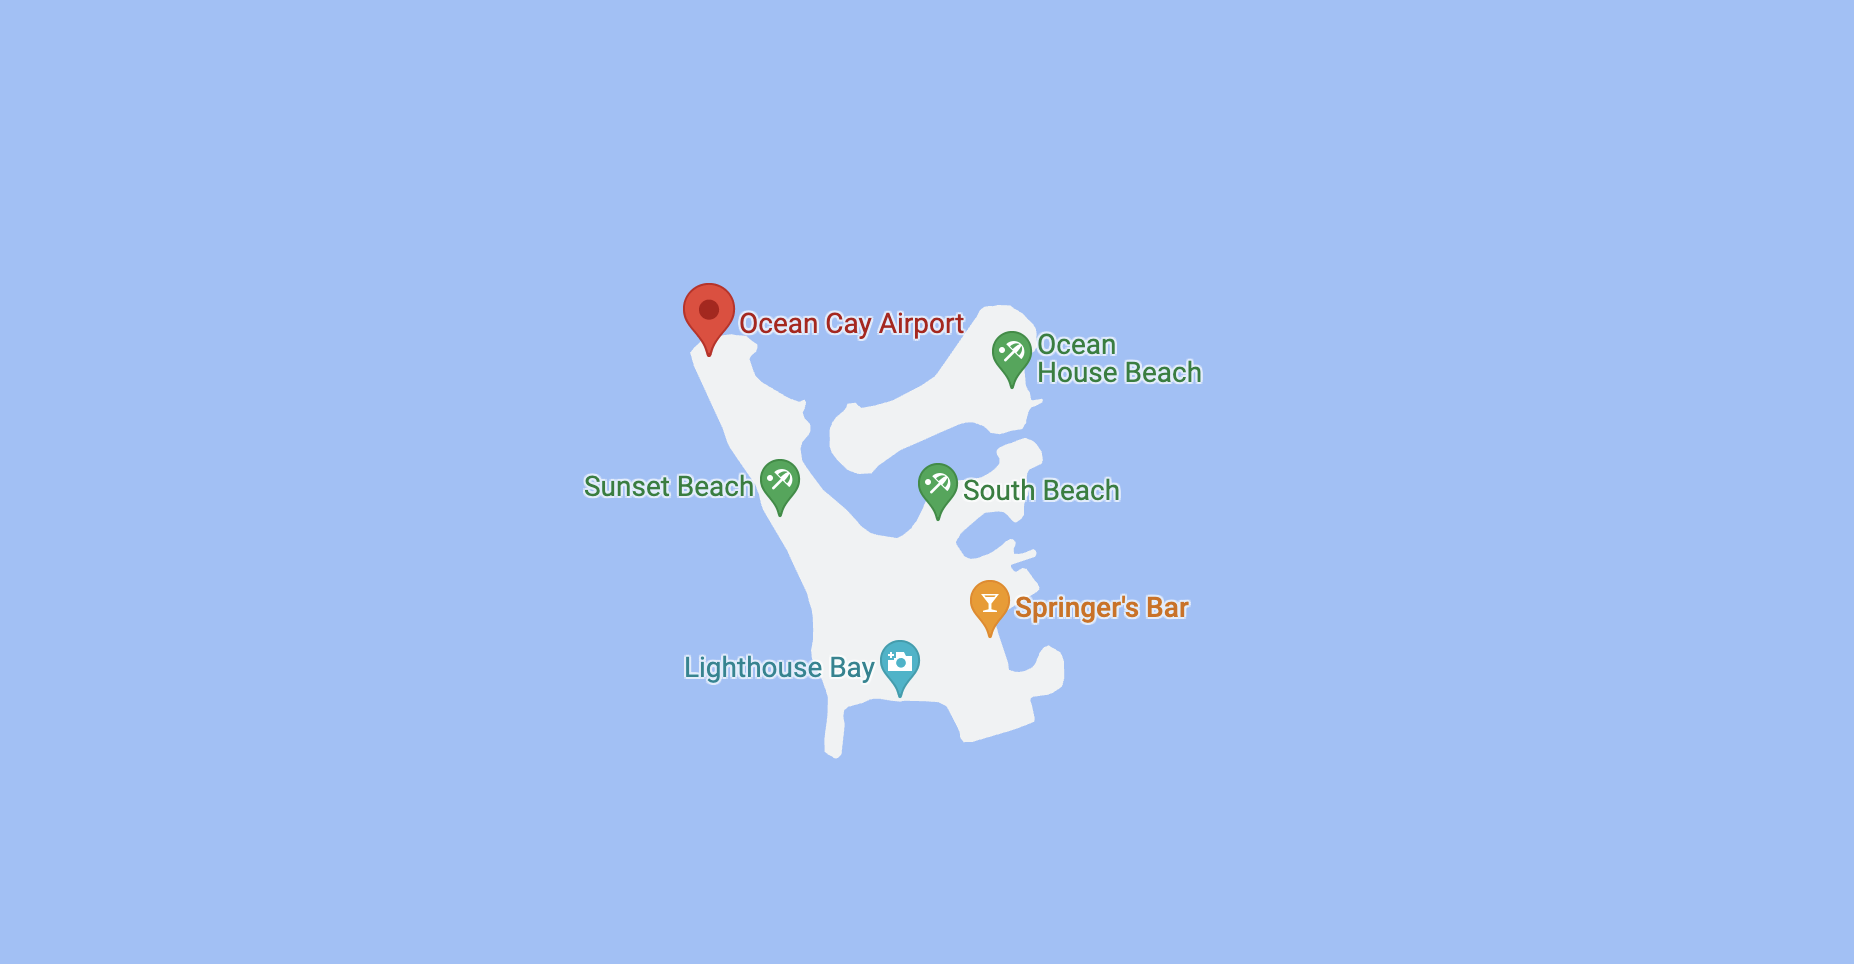 Ocean Cay Airport